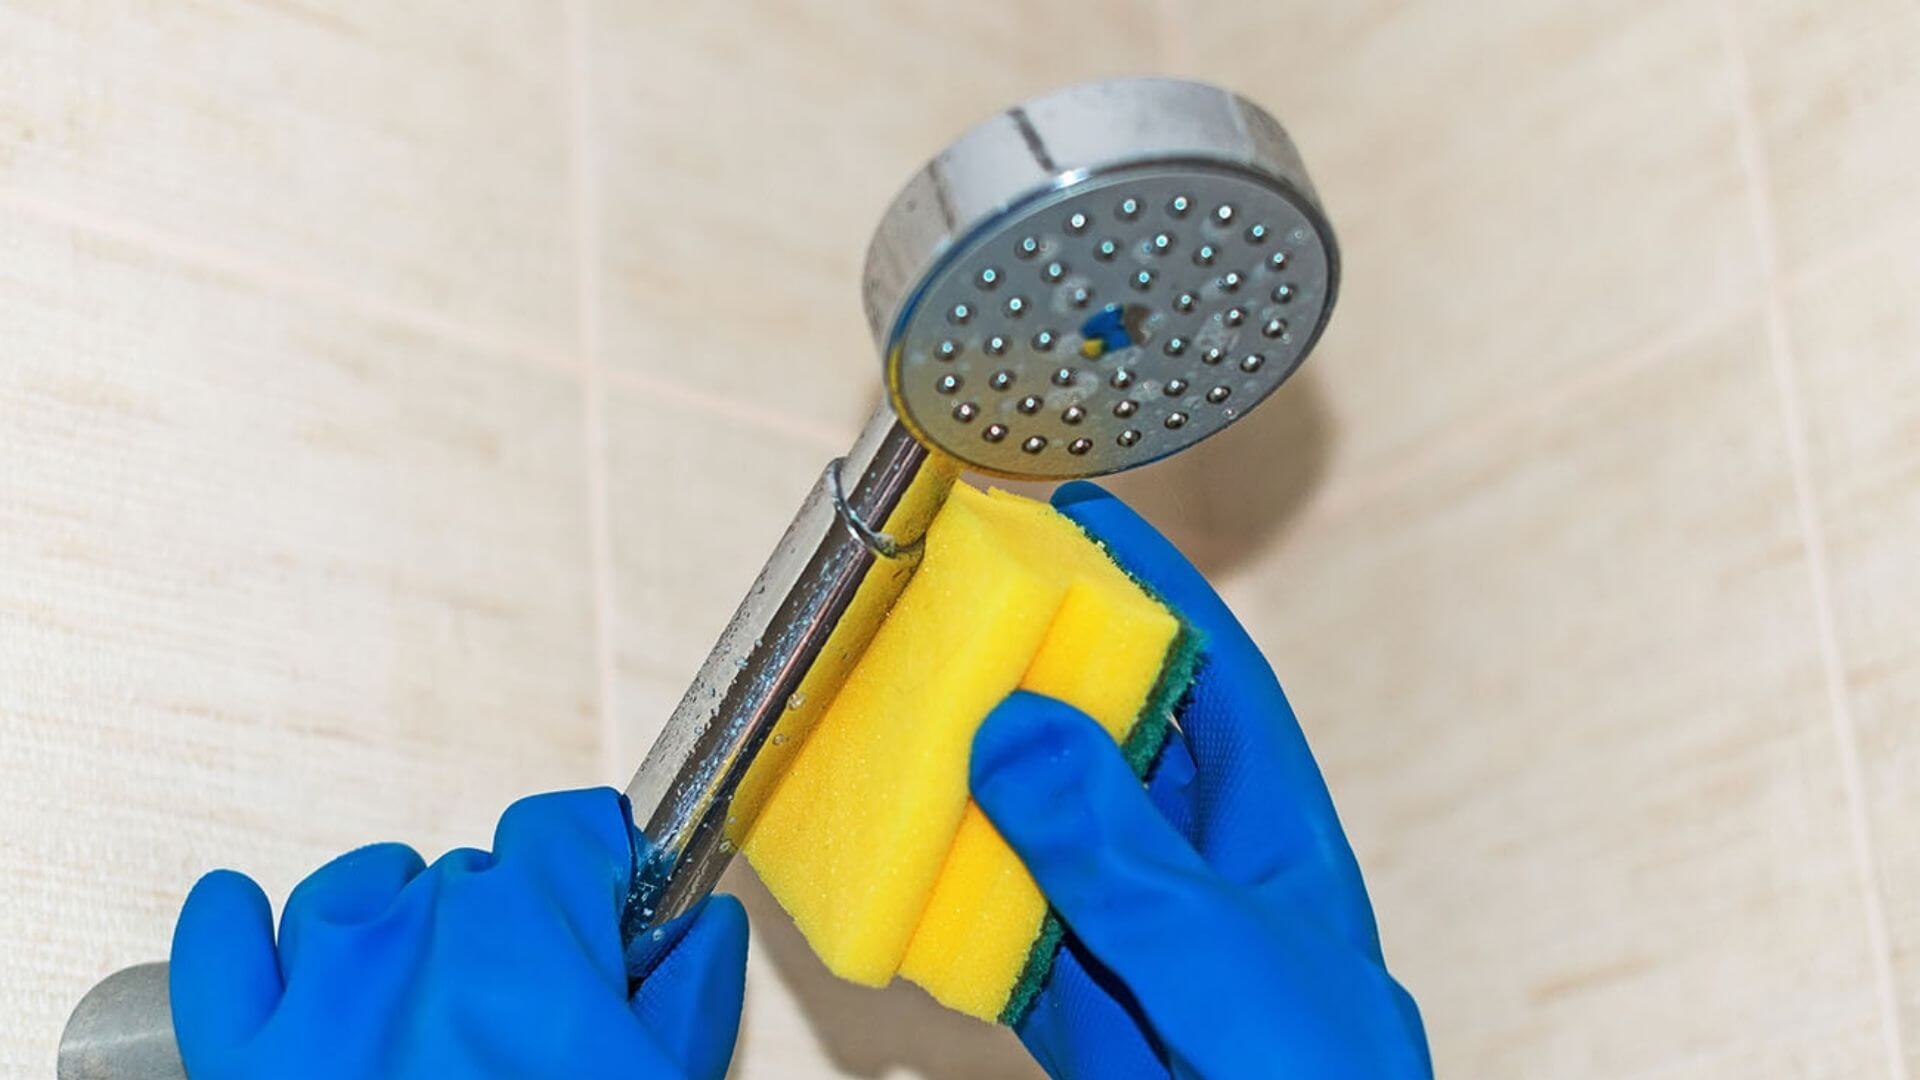 https://zeve.au/wp/uploads/2021/11/cleaning-shower-head-with-yellow-sponge.jpg